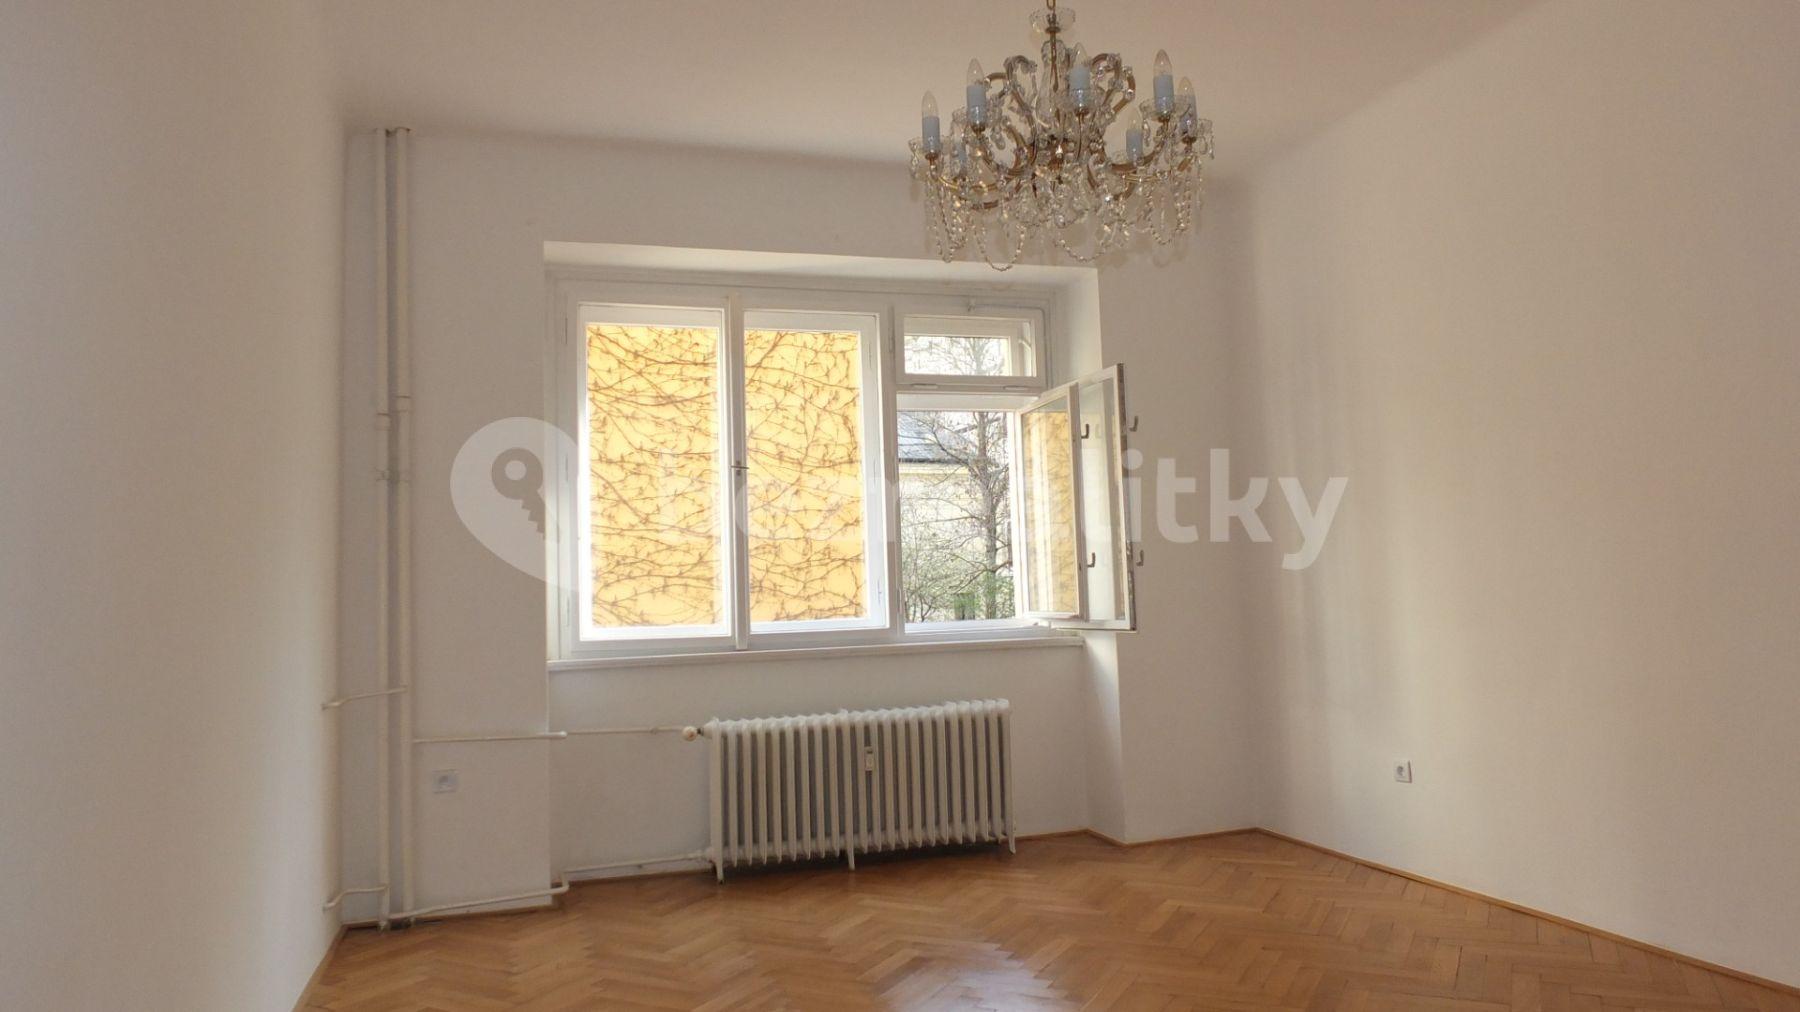 3 bedroom flat for sale, 80 m², Rumunská, Prague, Prague